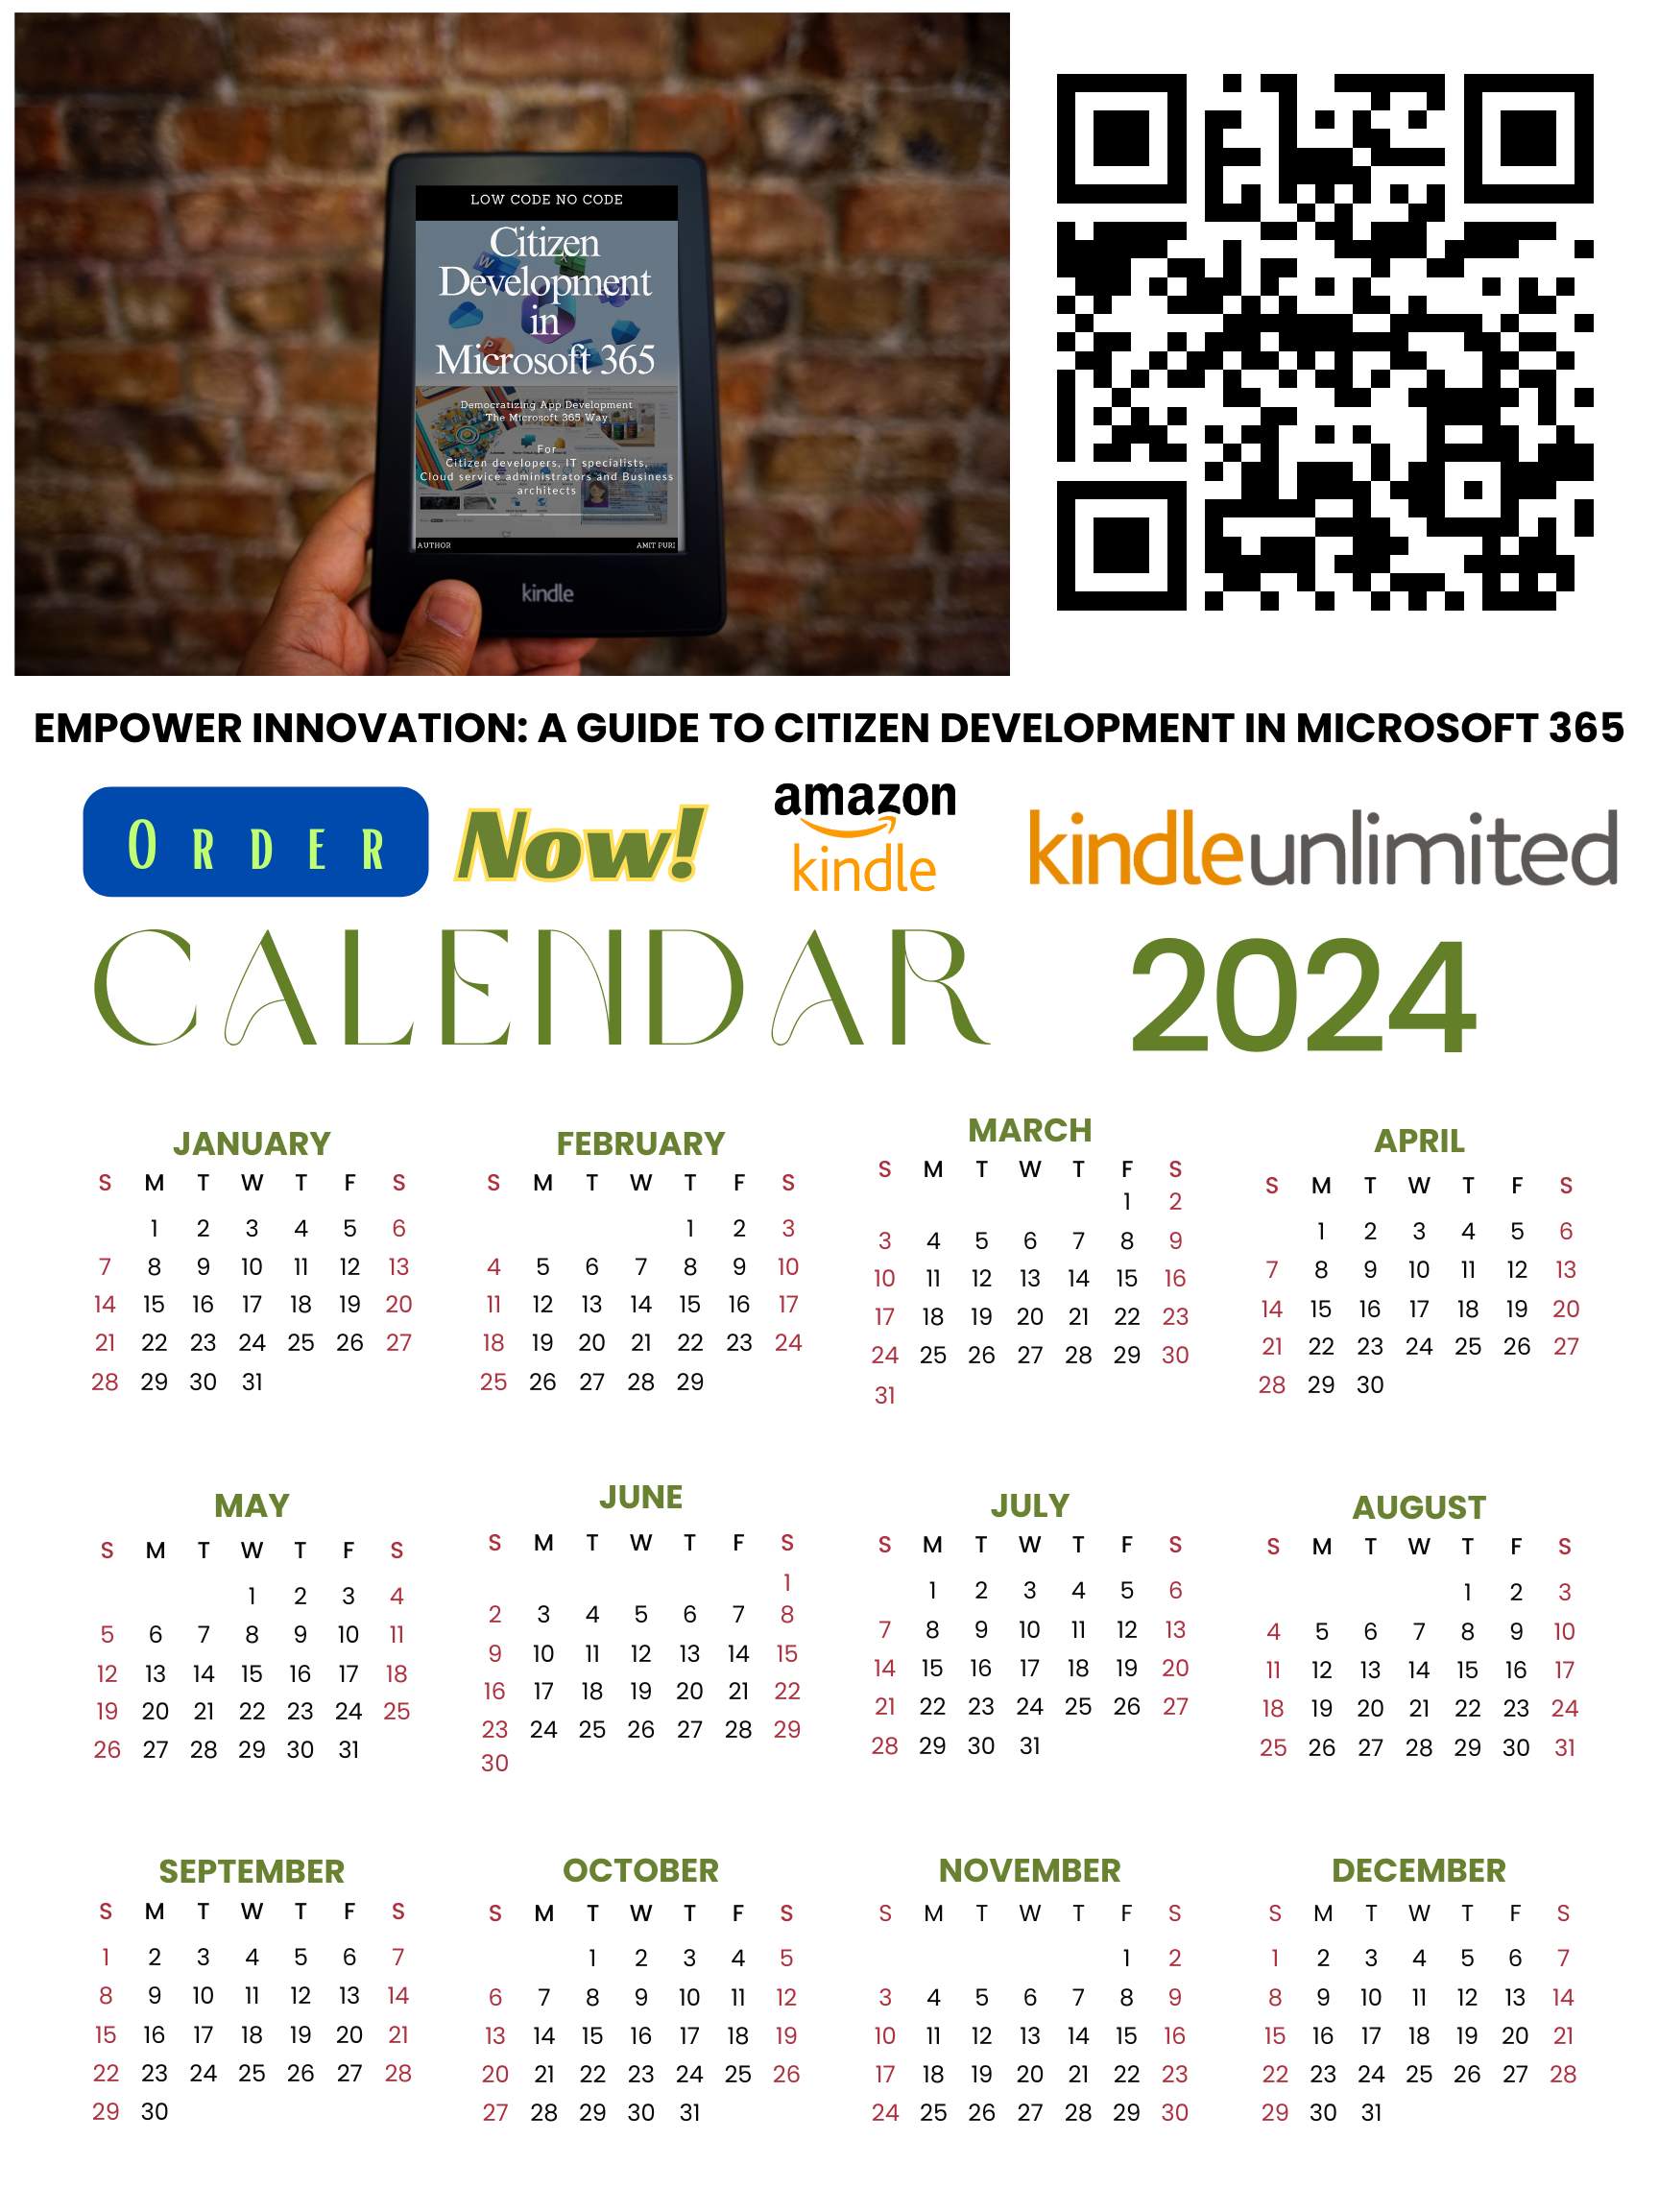 Order now - 2024 Calendar